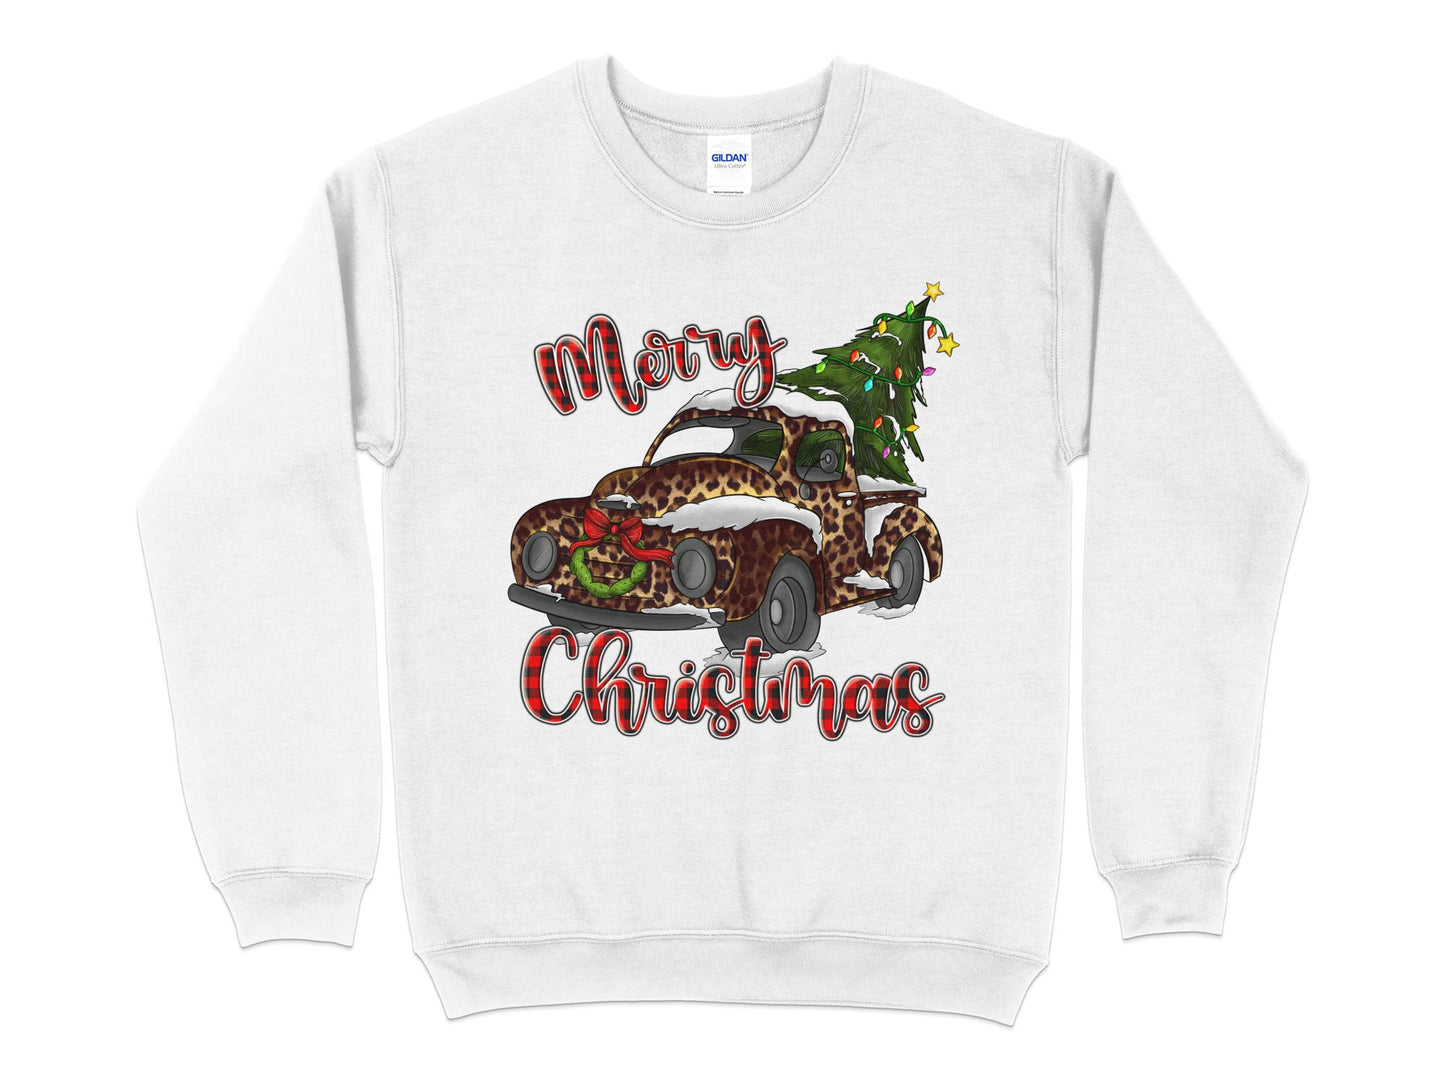 Merry Christmas Leopard Print Truck Sweatshirt, Christmas Sweater for Women, Christmas Gift for Women, Holiday Sweater, Xmas Shirt - Mardonyx Sweatshirt S / White